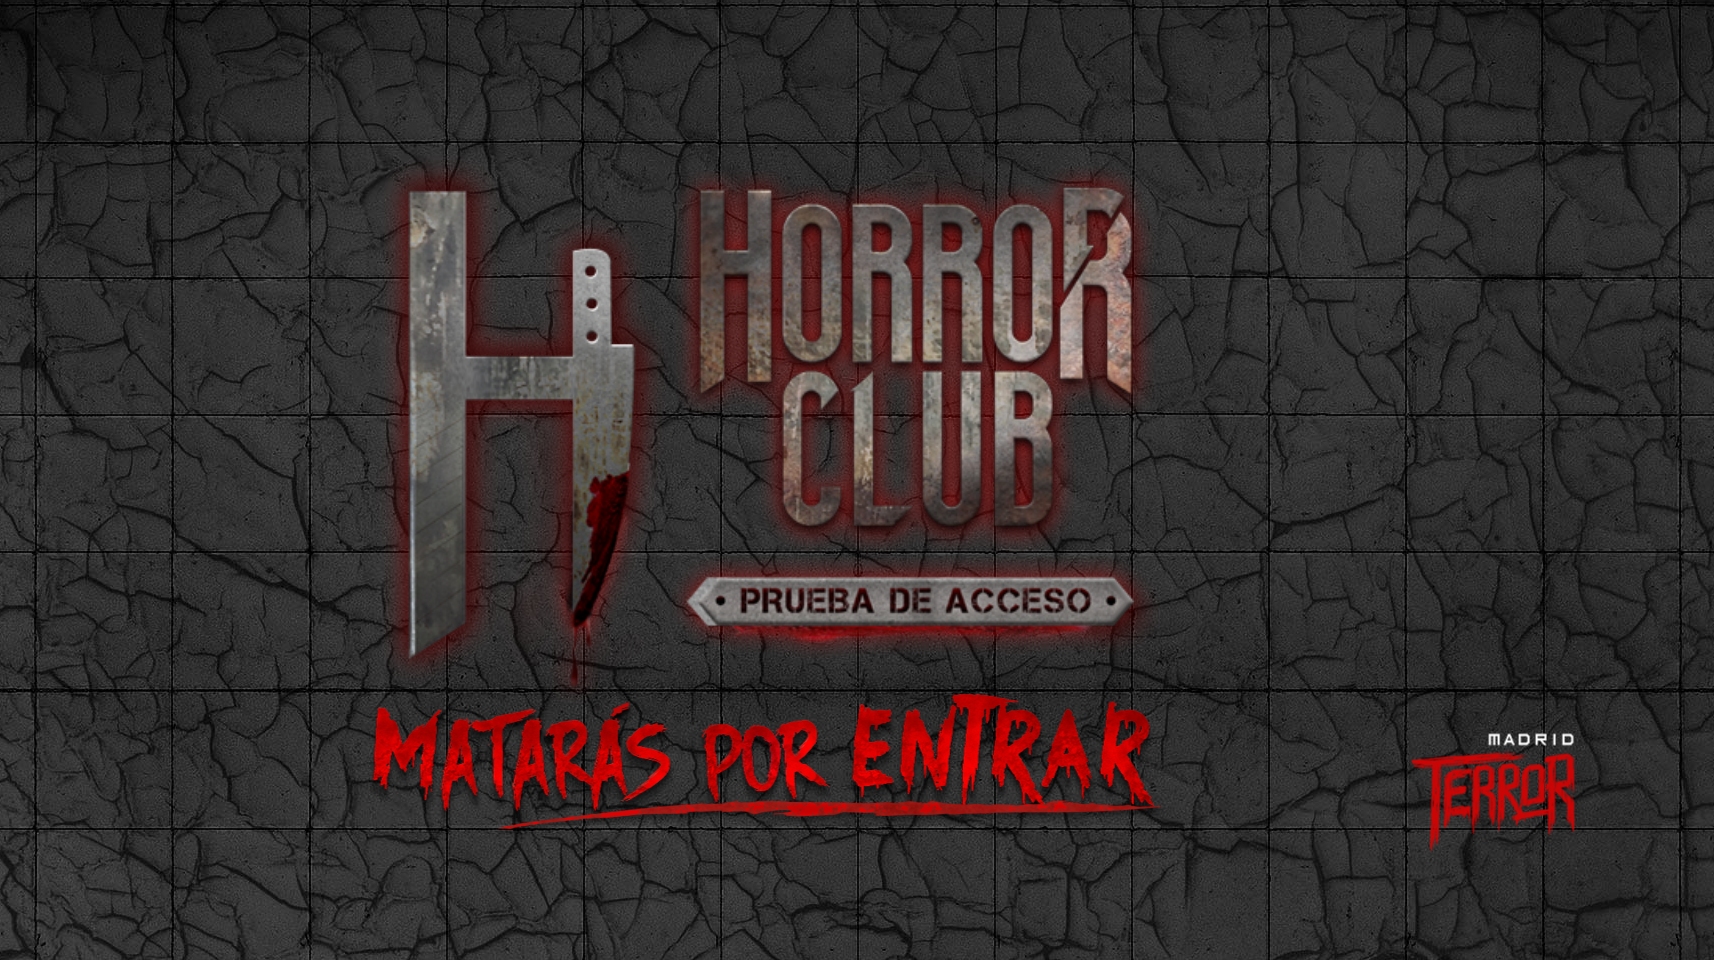 Horror Club - Madrid Terror - Review Escape Room